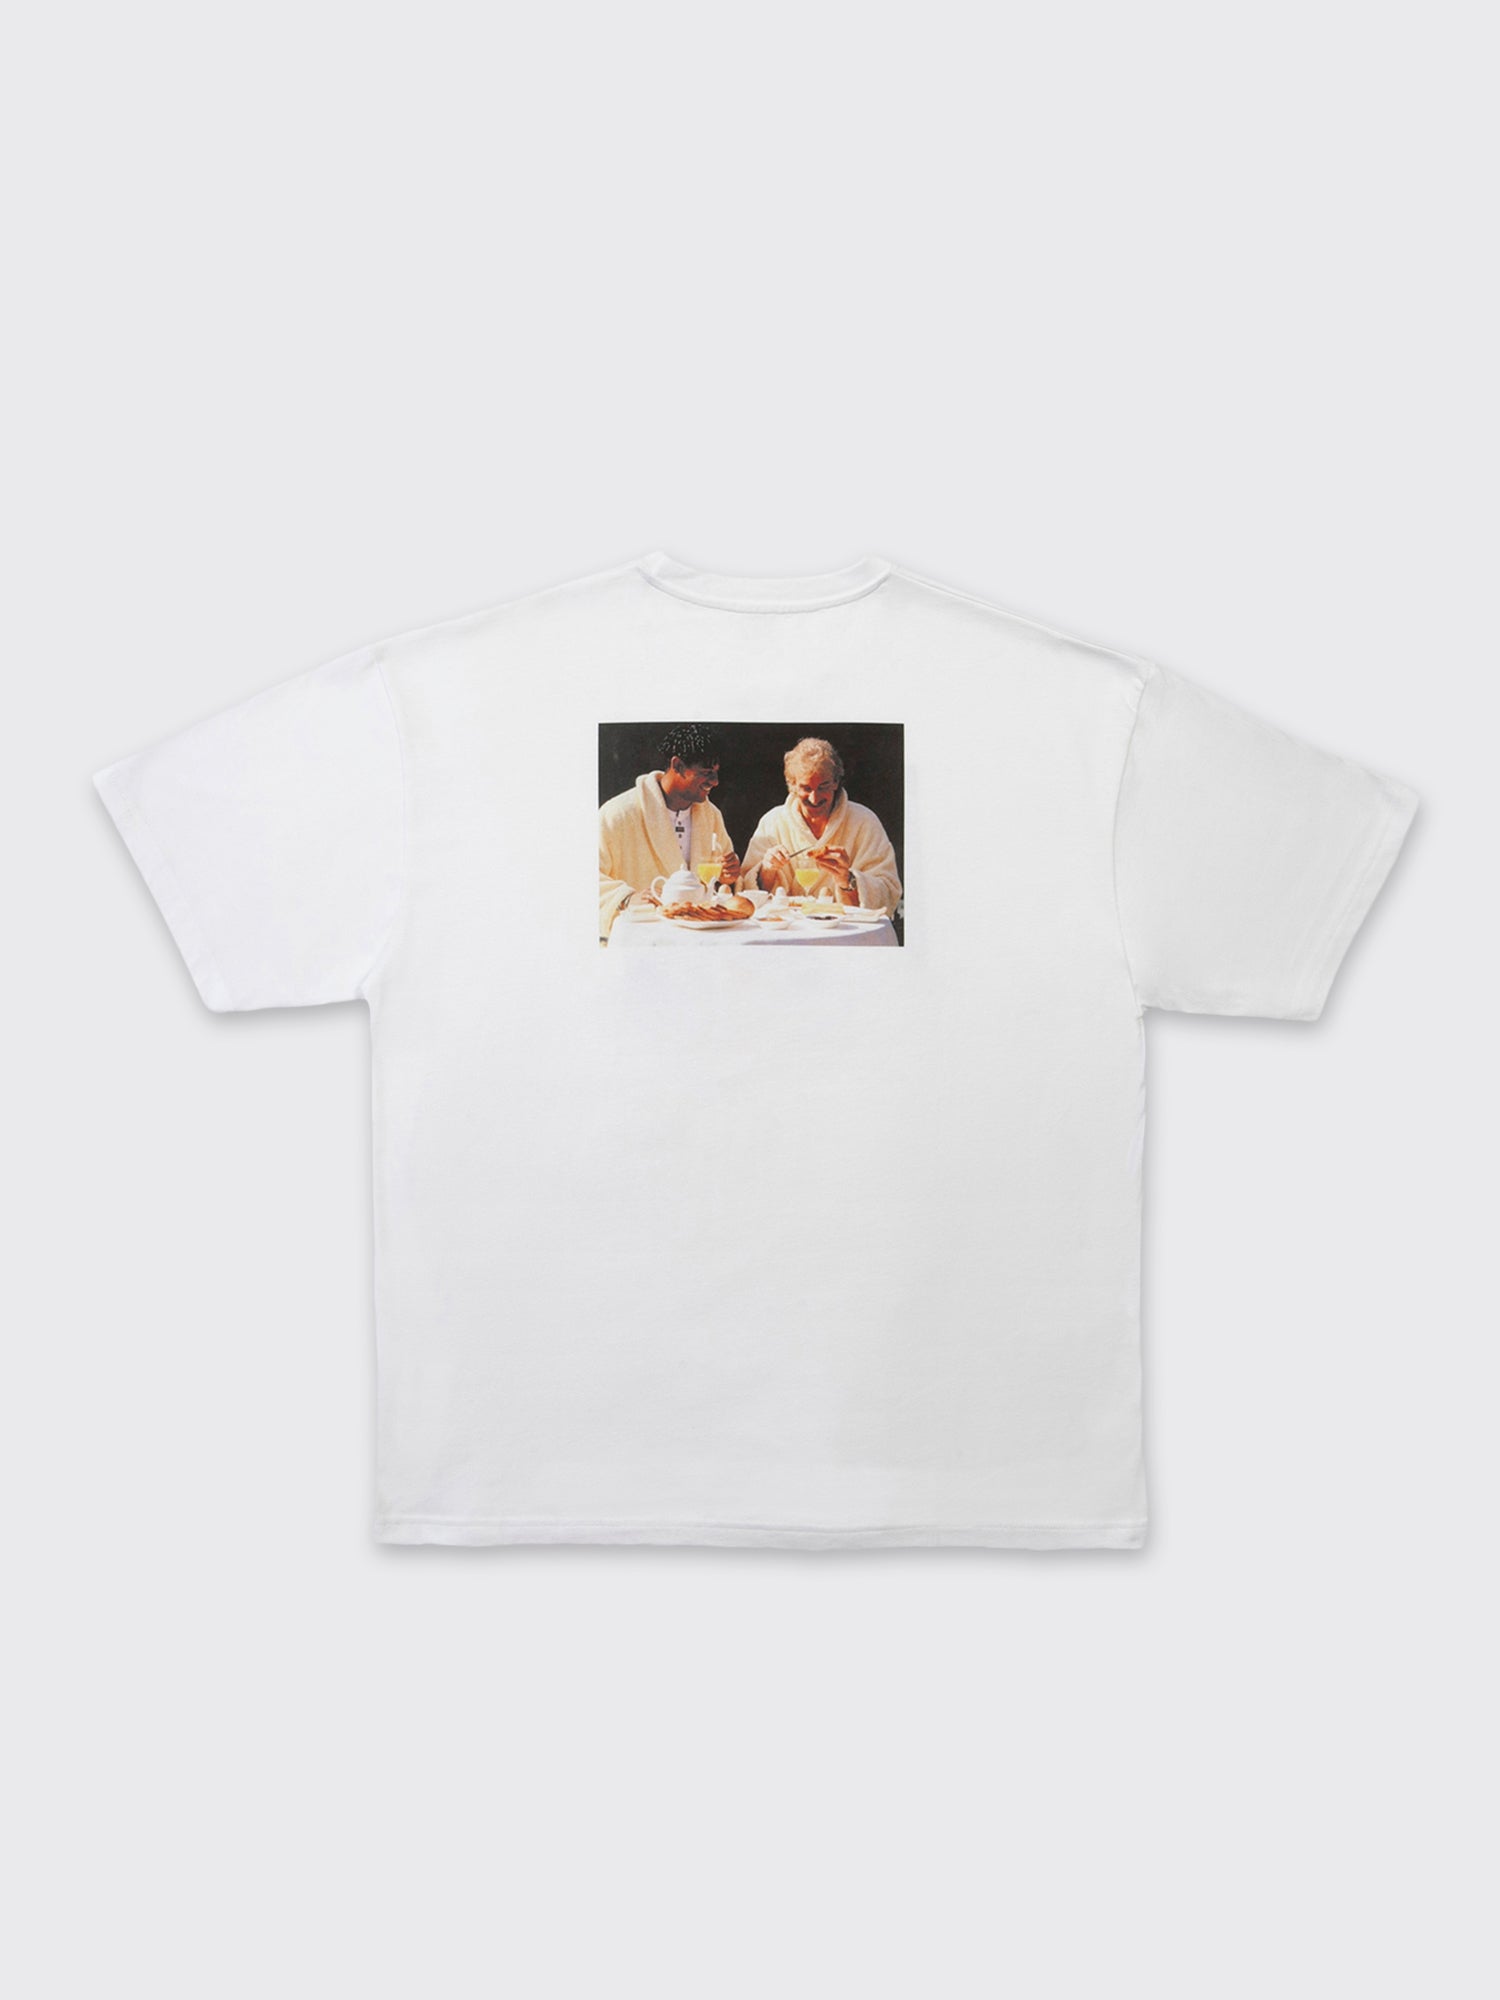 Frank T-Shirt (White)